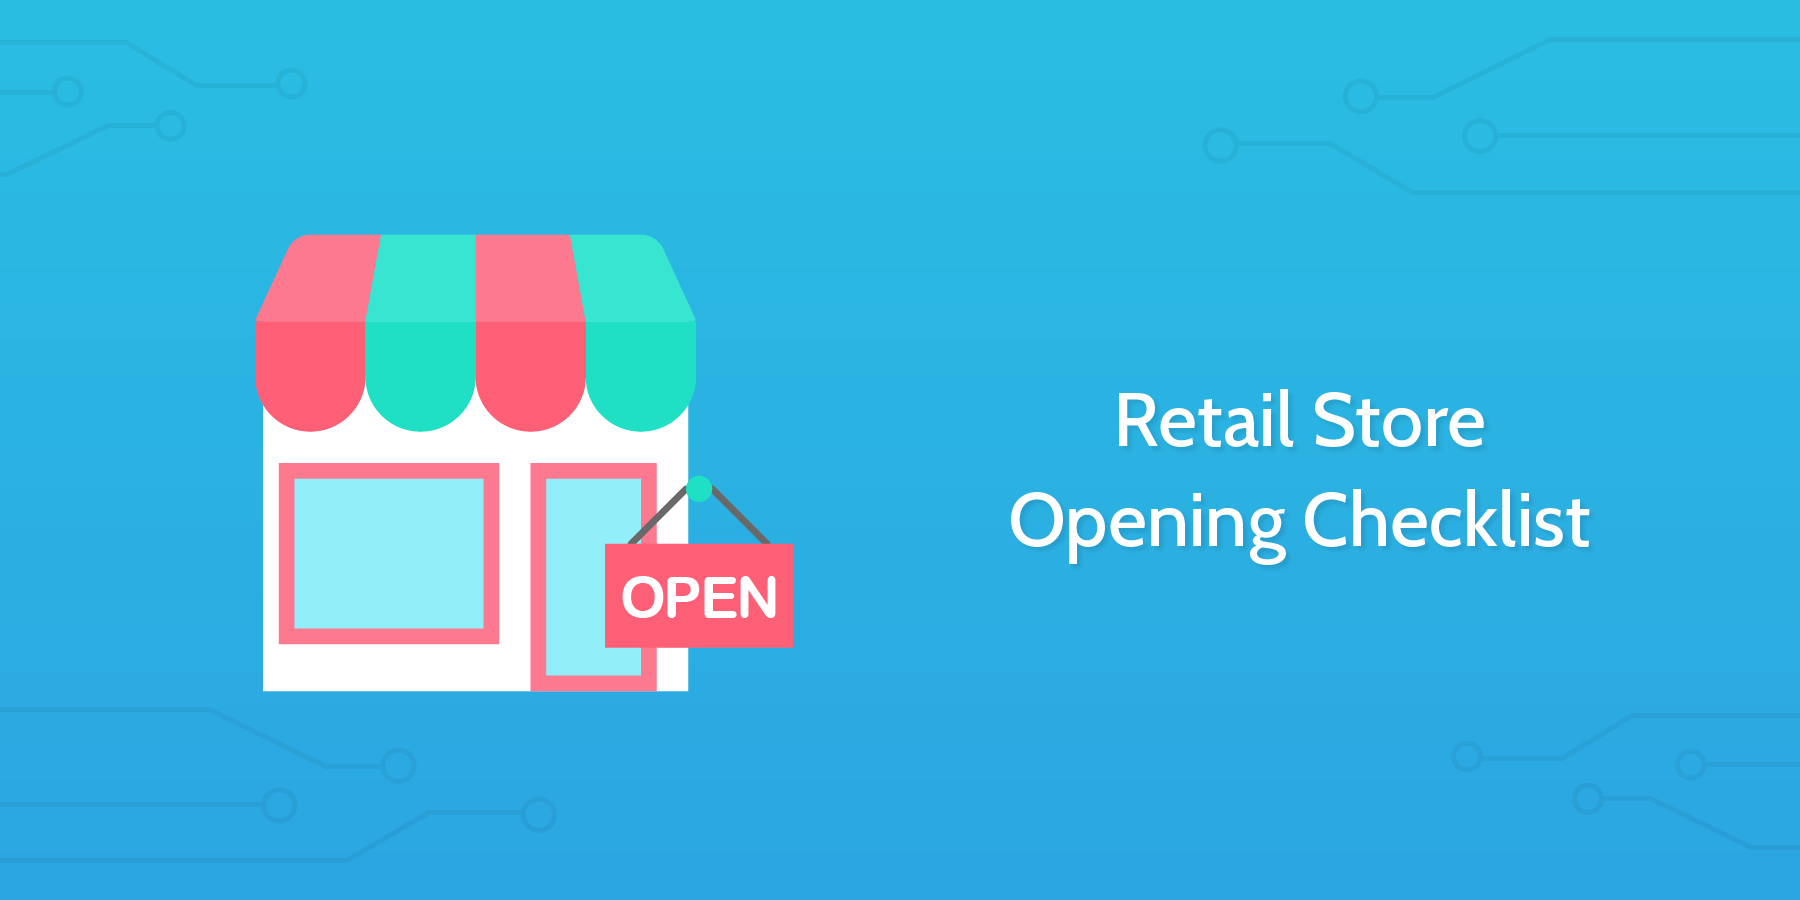 Retail Store Opening Checklist